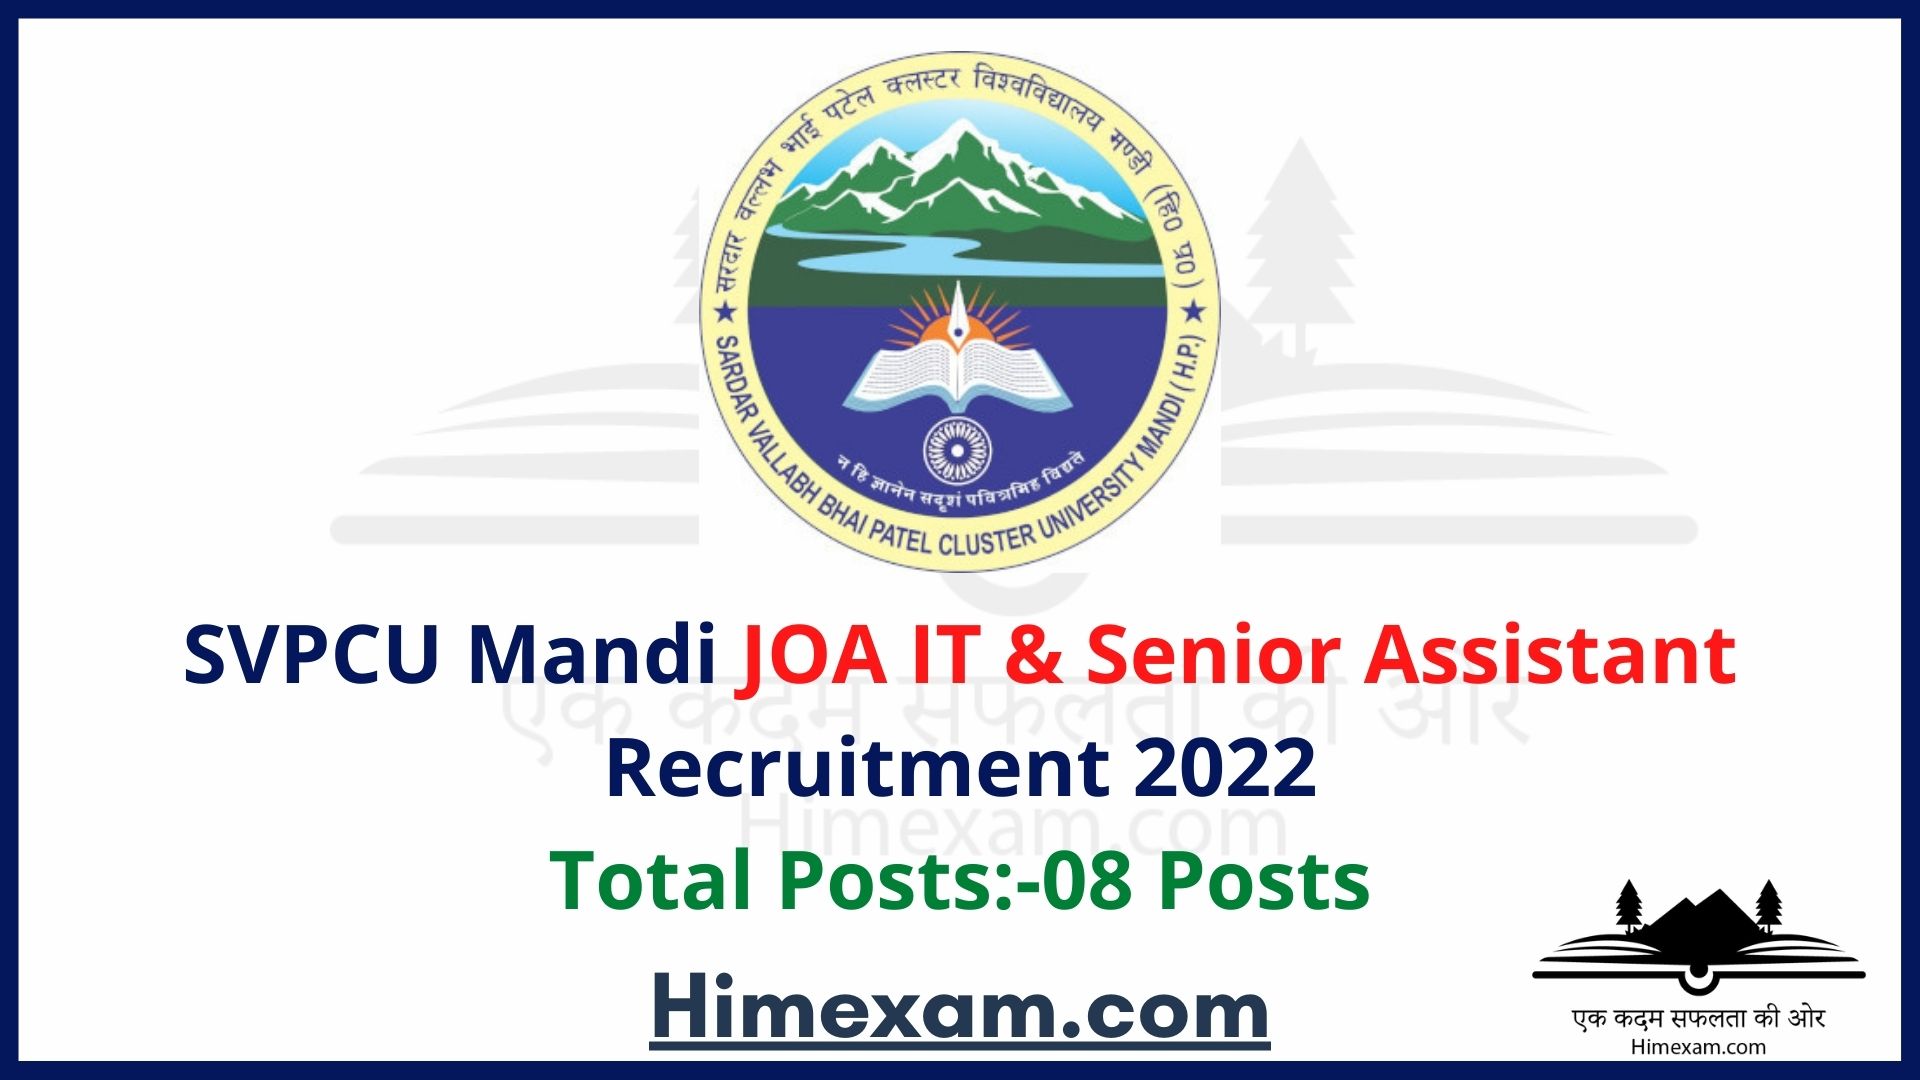 SVPCU Mandi JOA IT & Senior Assistant Recruitment 2022